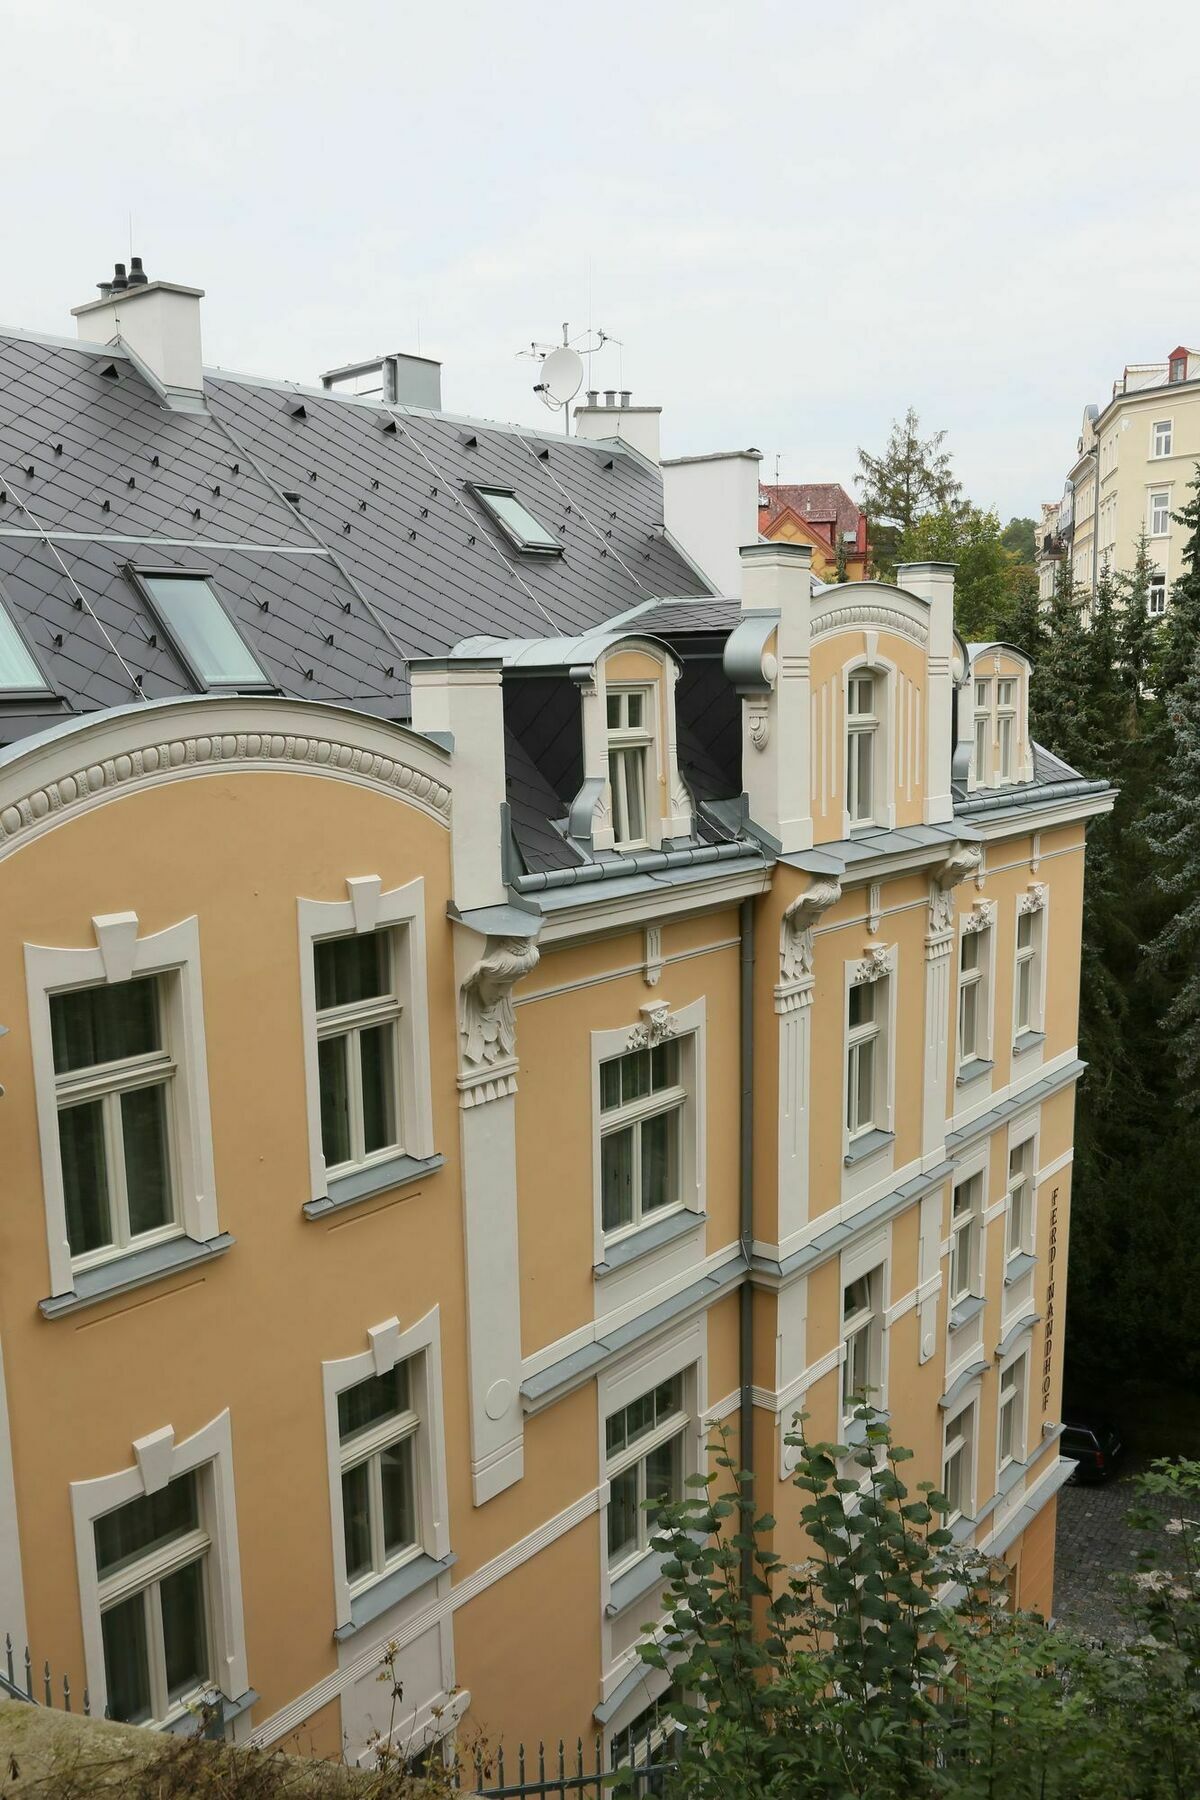 Ferdinandhof Apart-Hotel Karlovy Vary Exterior photo